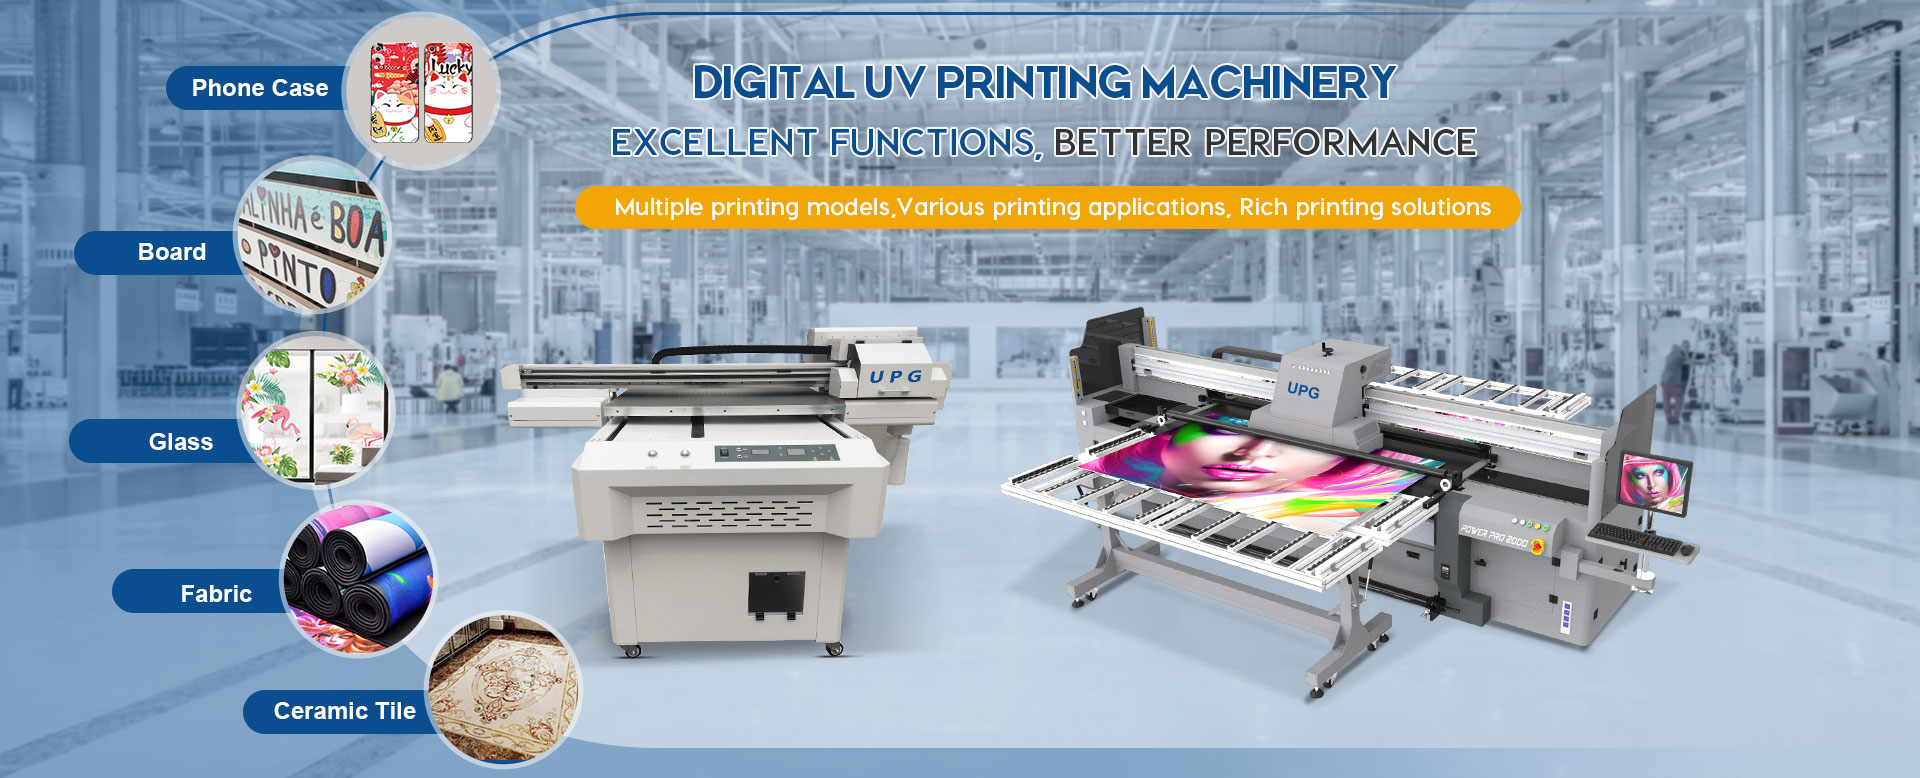 Digital UV printing machine